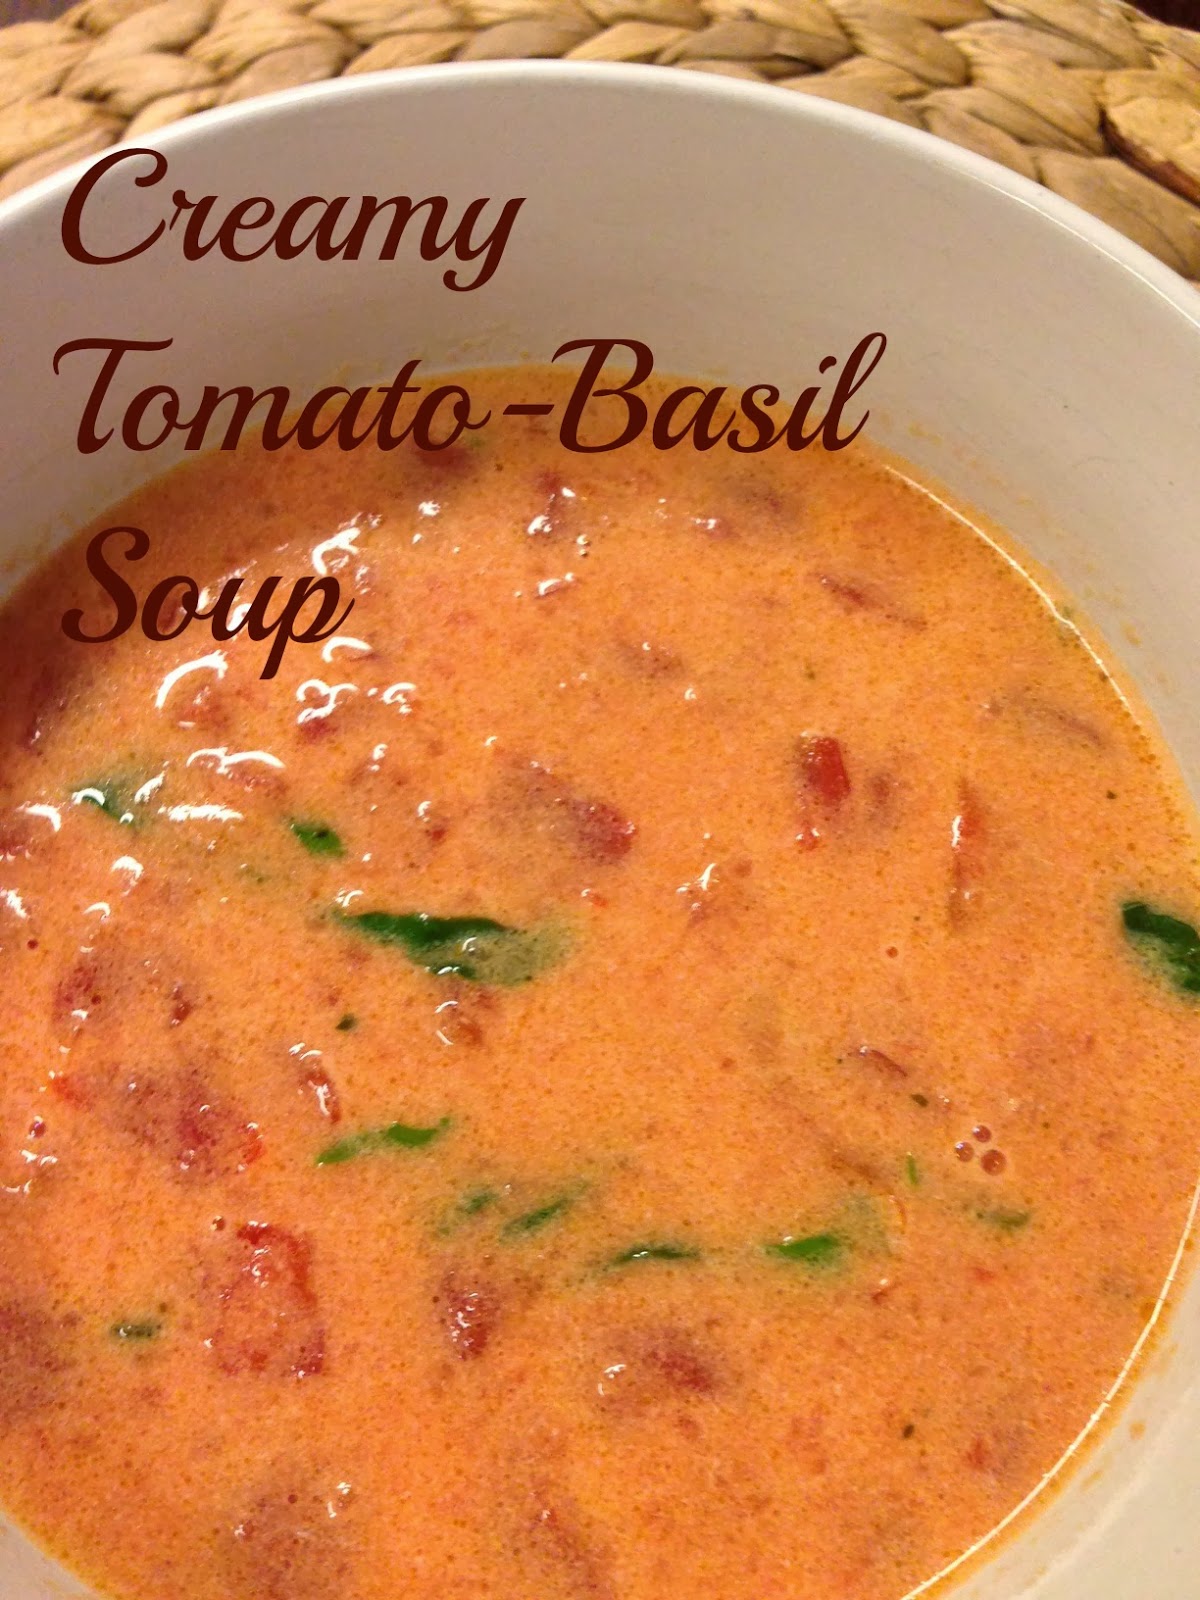 Life at 7000 feet: Creamy Tomato-Basil Soup